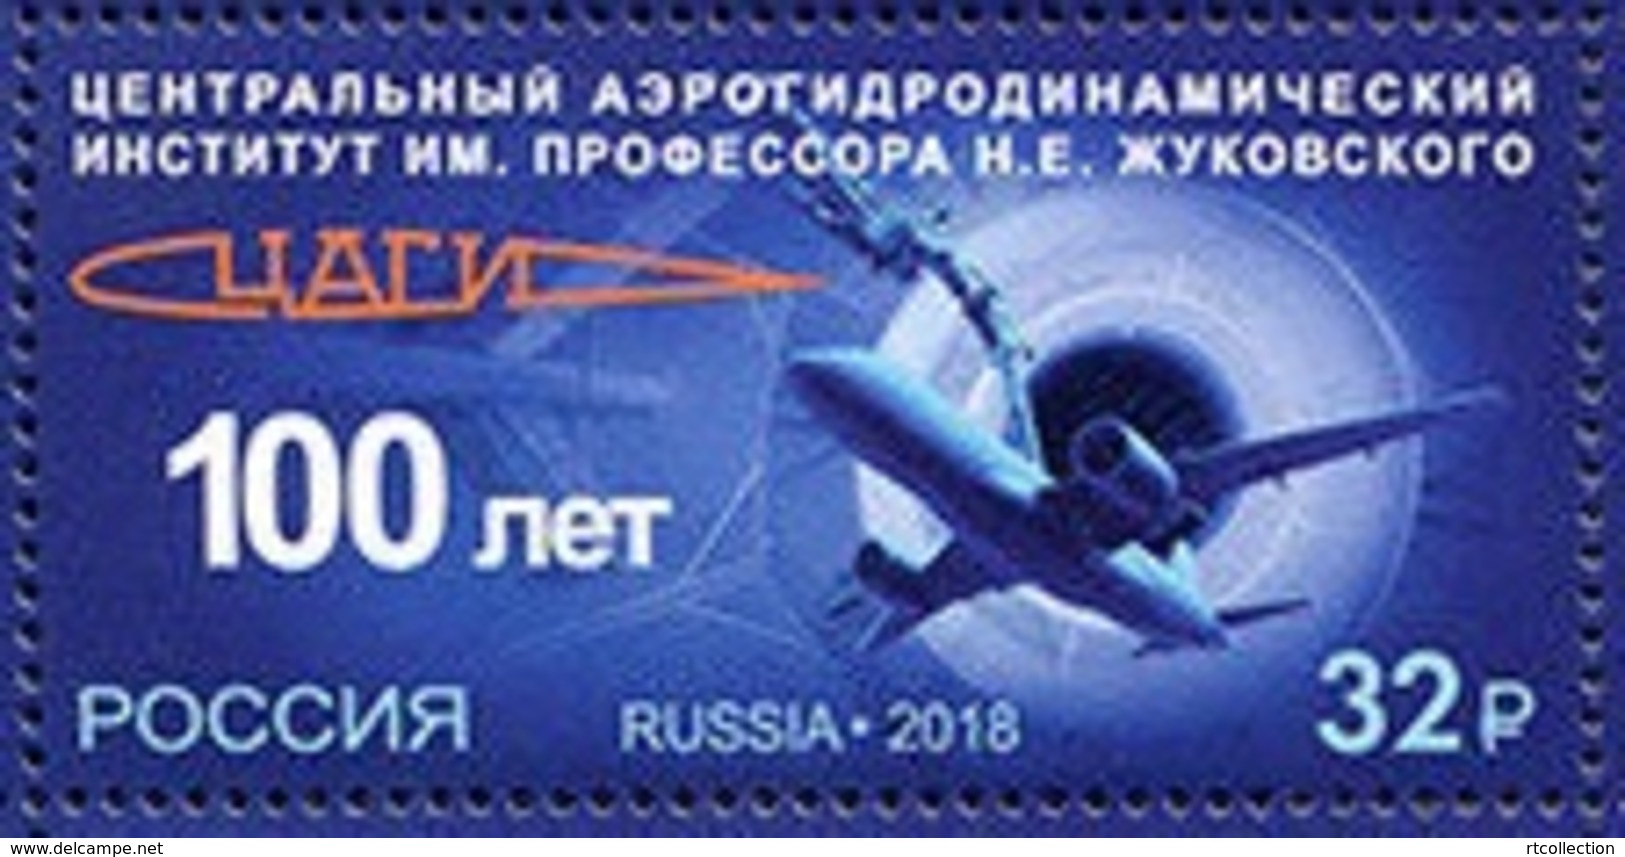 Russia 2018 One 100th Anni TsAGI Zhukovsky Central Aerohydrodynamic Institute Sciences Celebrations Aviation Stamp MNH - Physics